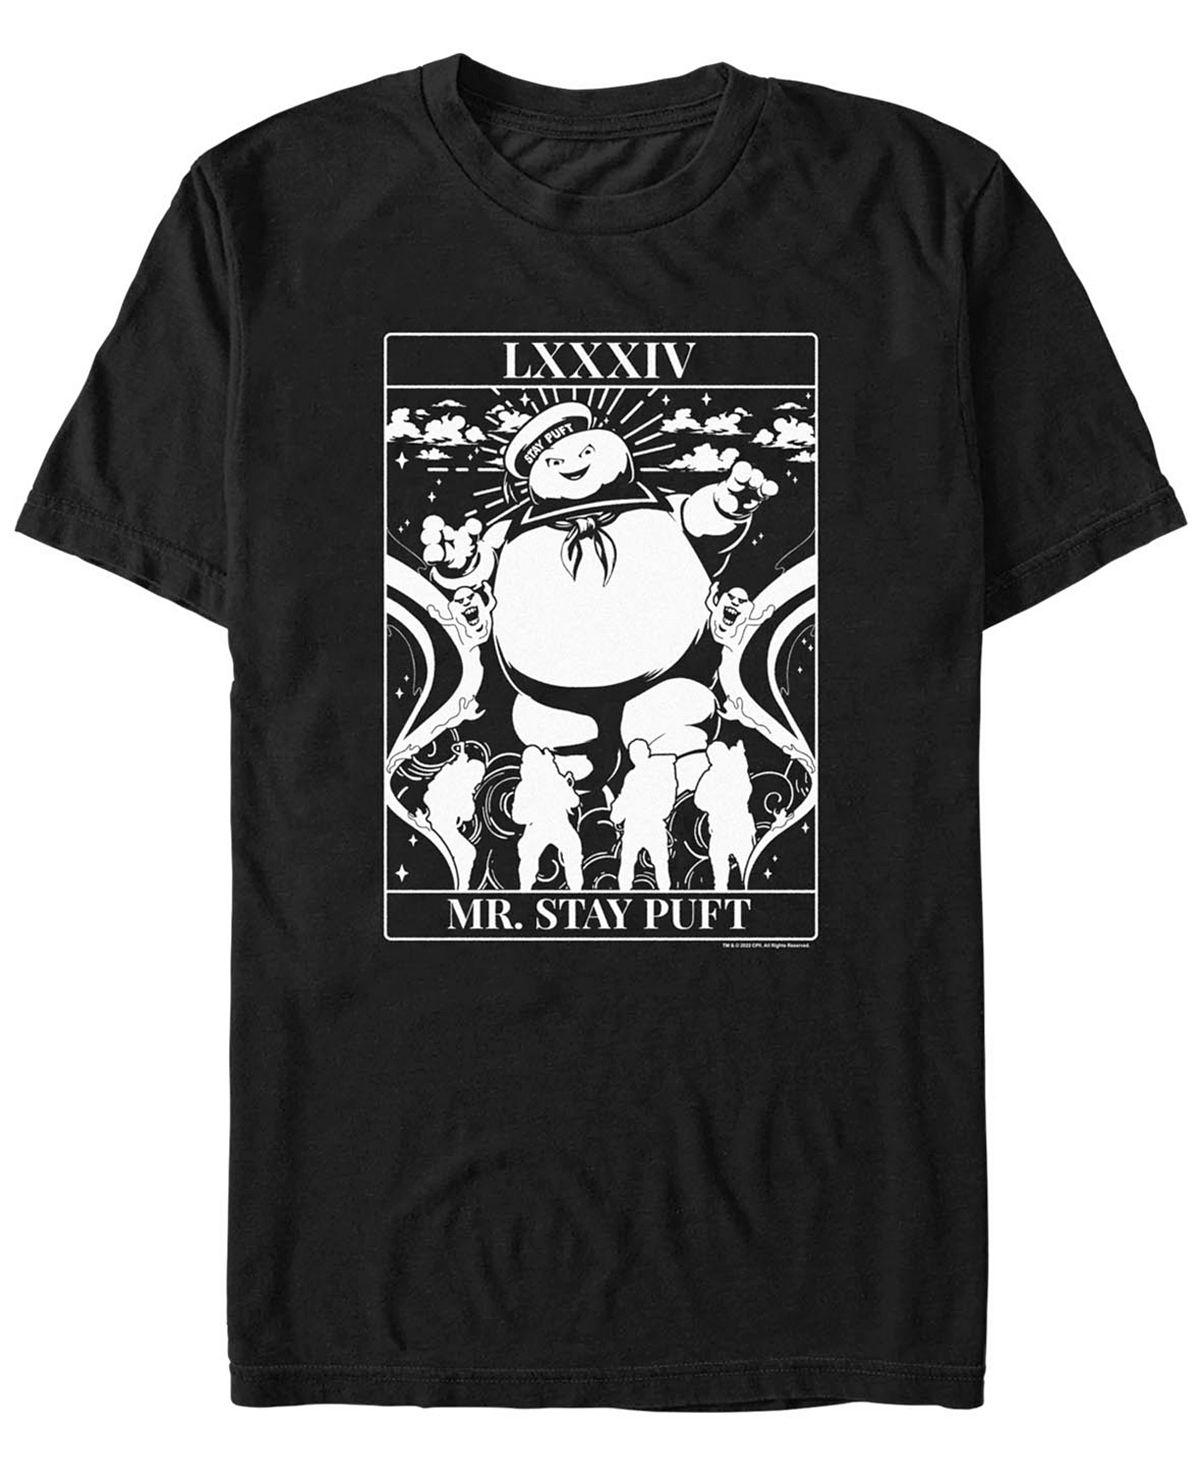 Мужская футболка с короткими рукавами ghostbusters puft tarot Fifth Sun, черный набор значков numskull ghostbusters pin kings zuul